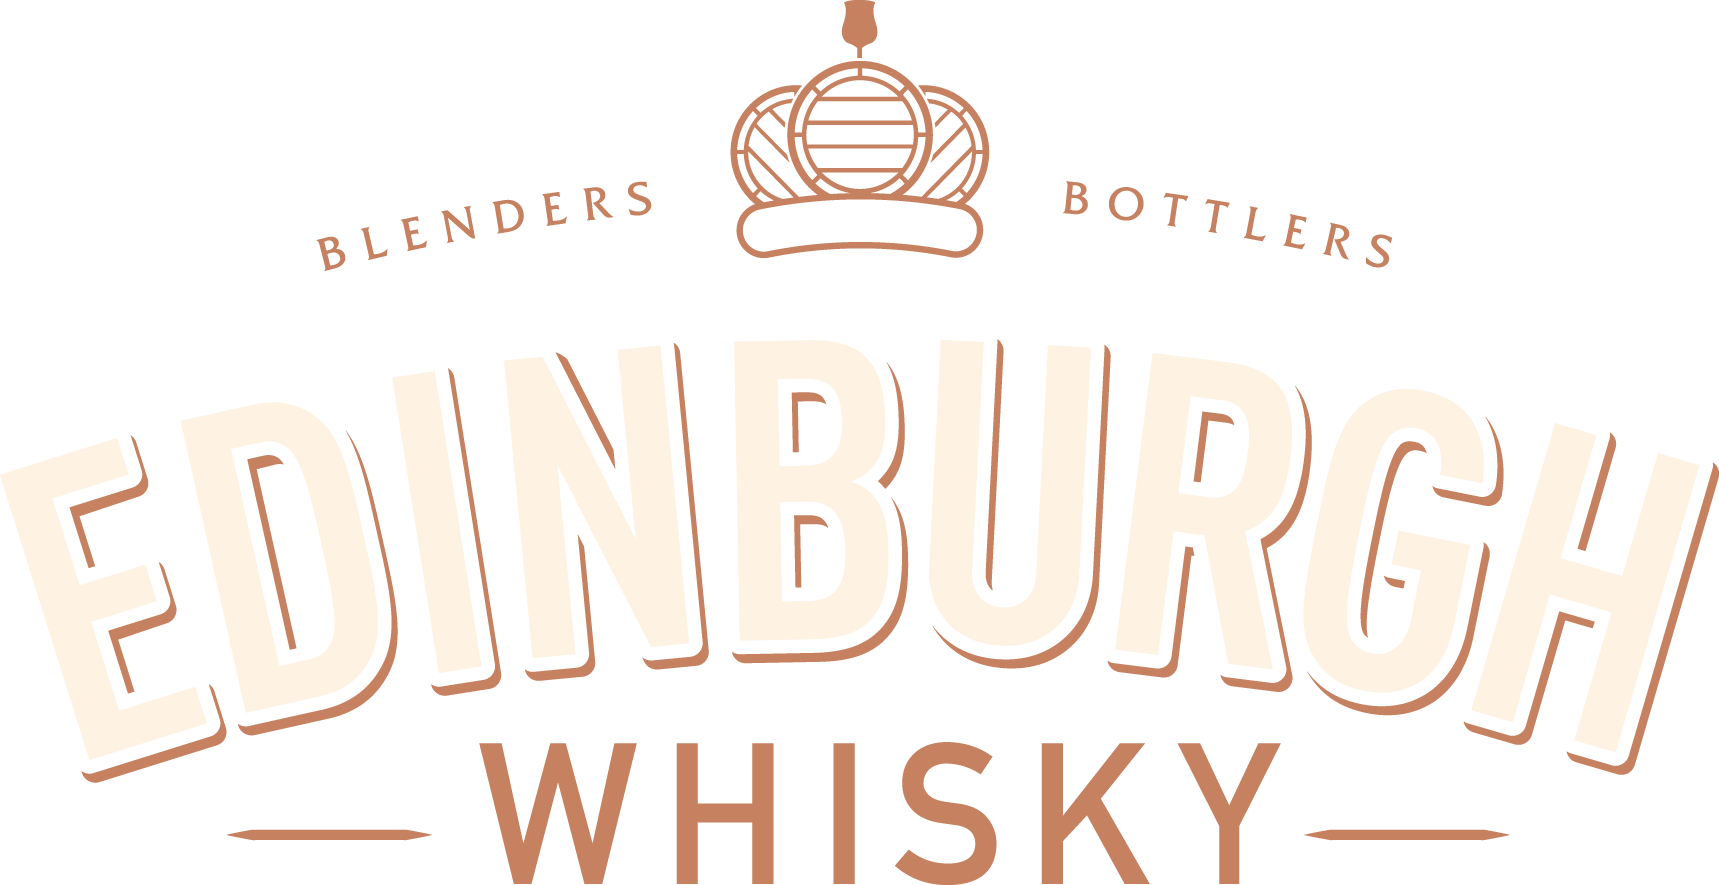 Edinburgh Whisky